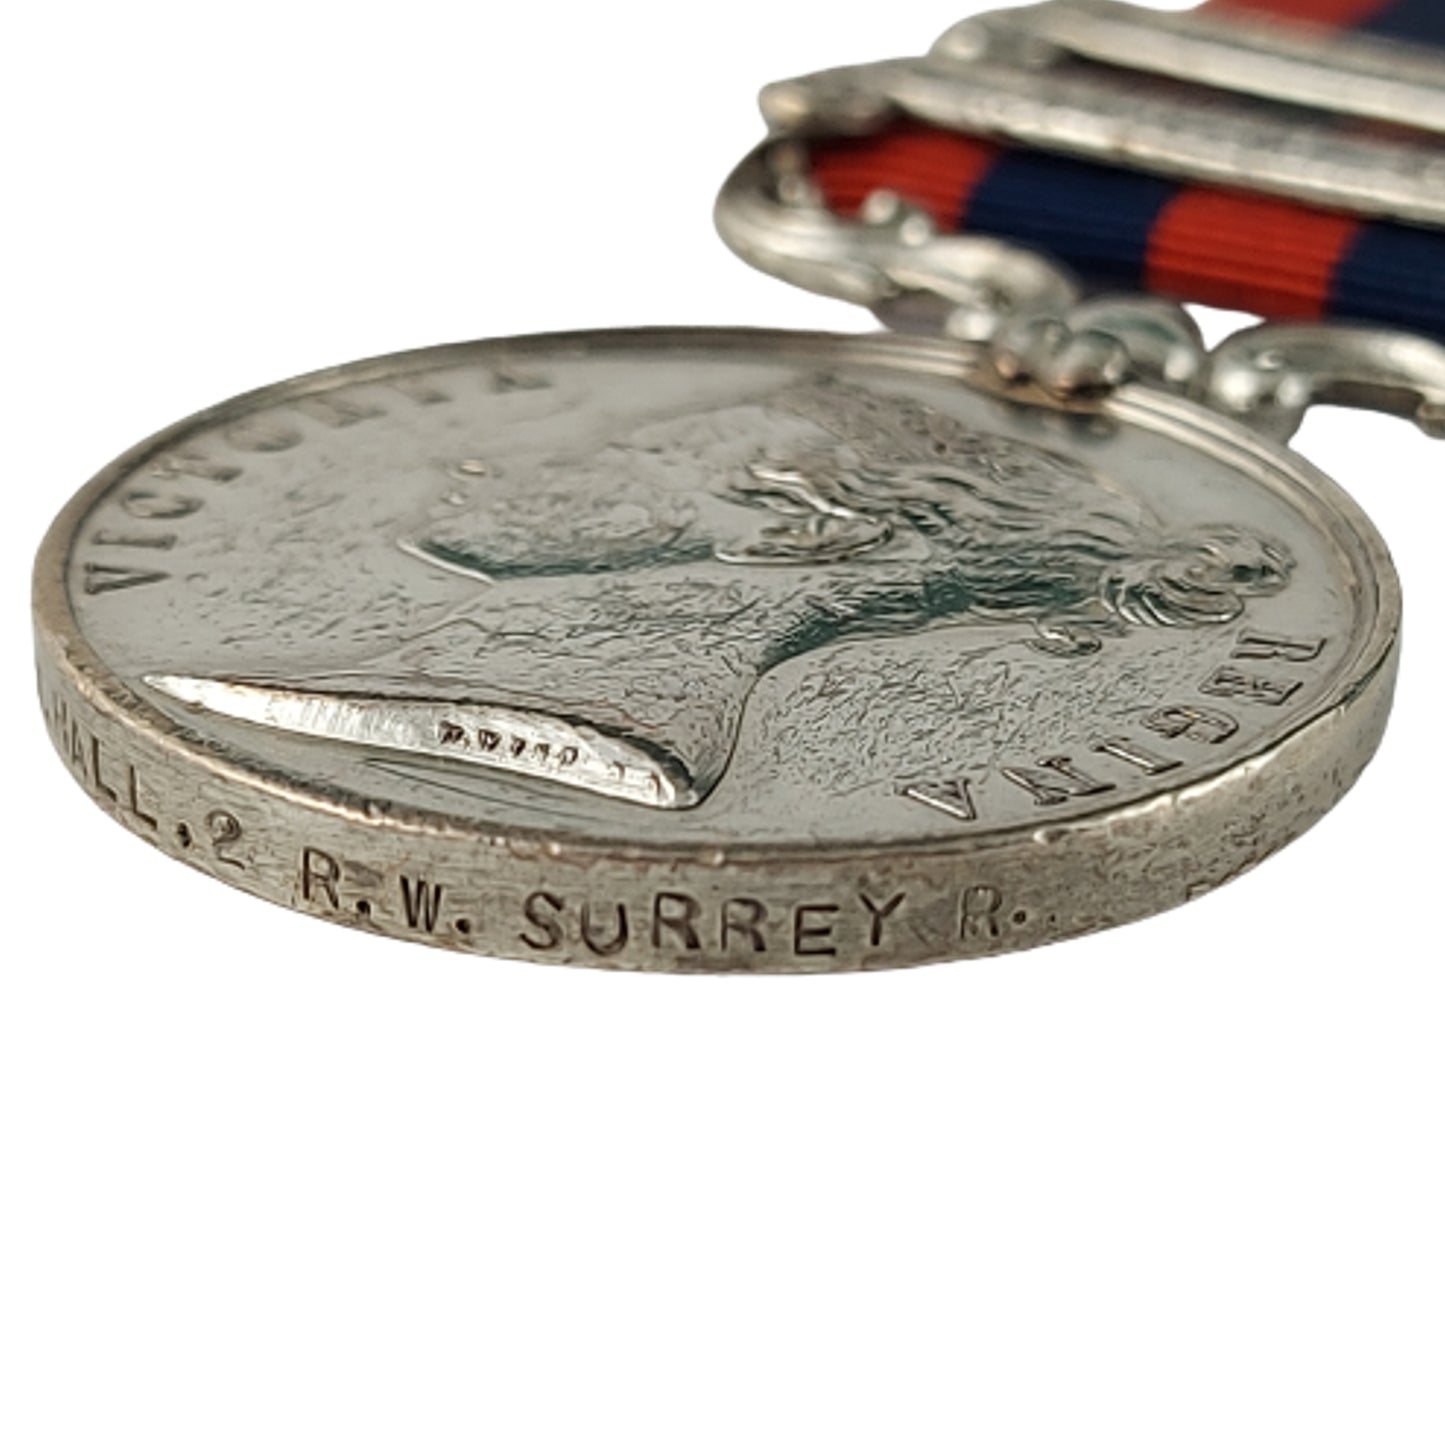 1854 India General Service Medal With 2 Bars - Royal West Surrey Regiment